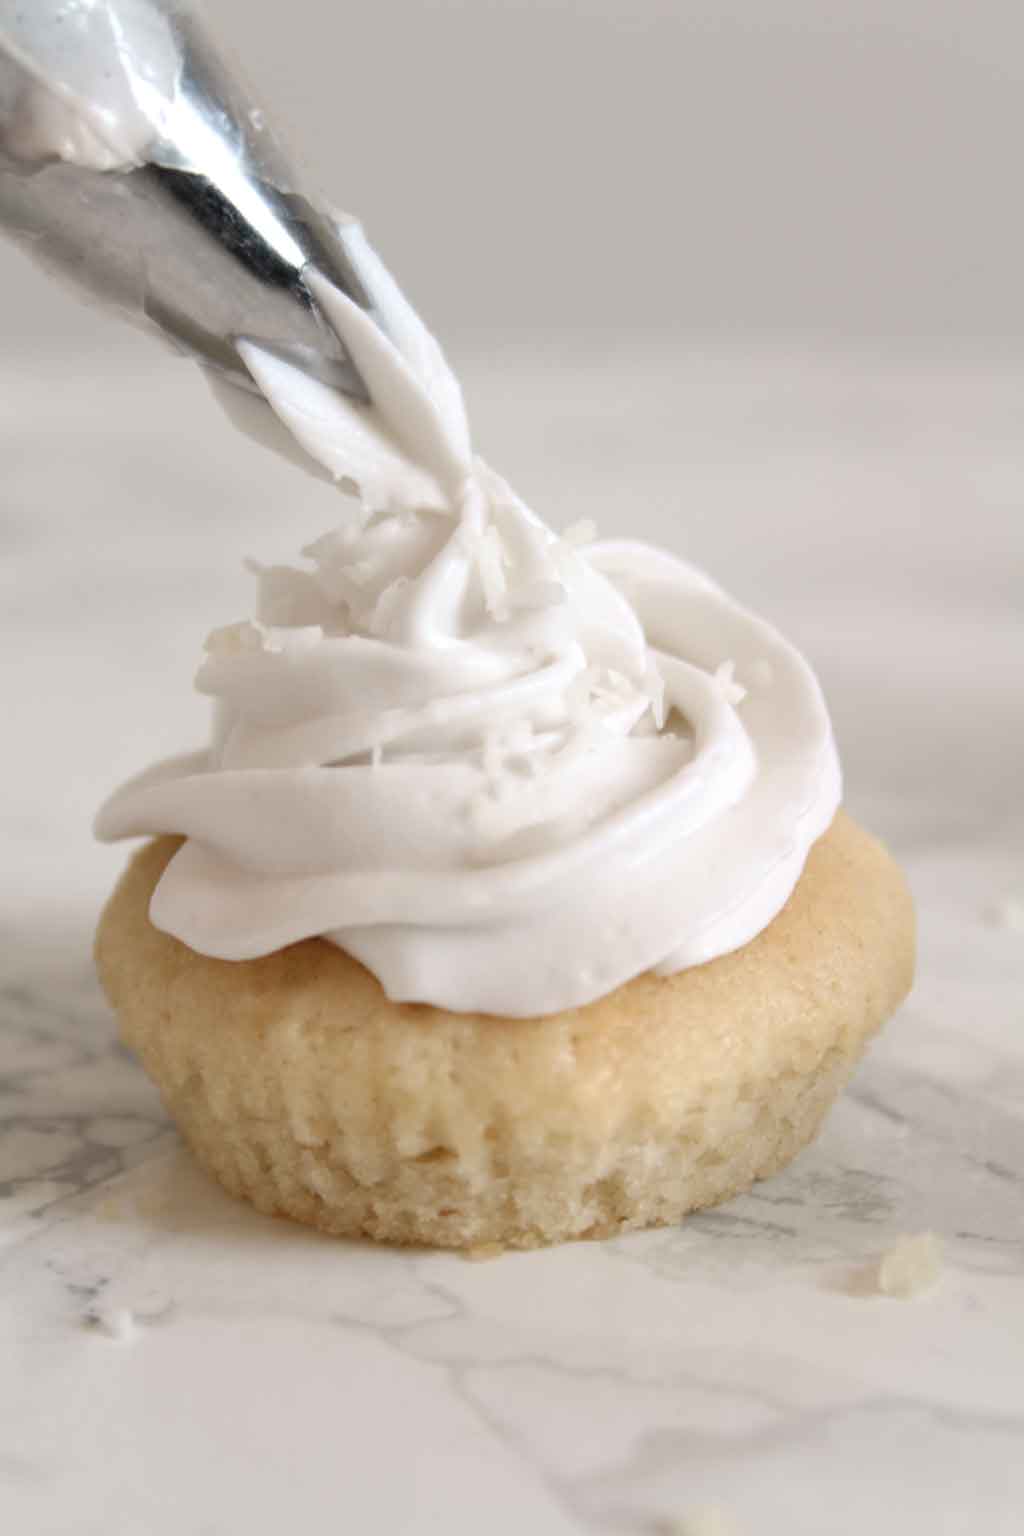 Piping vegan whipped Cream Onto A Cupcake